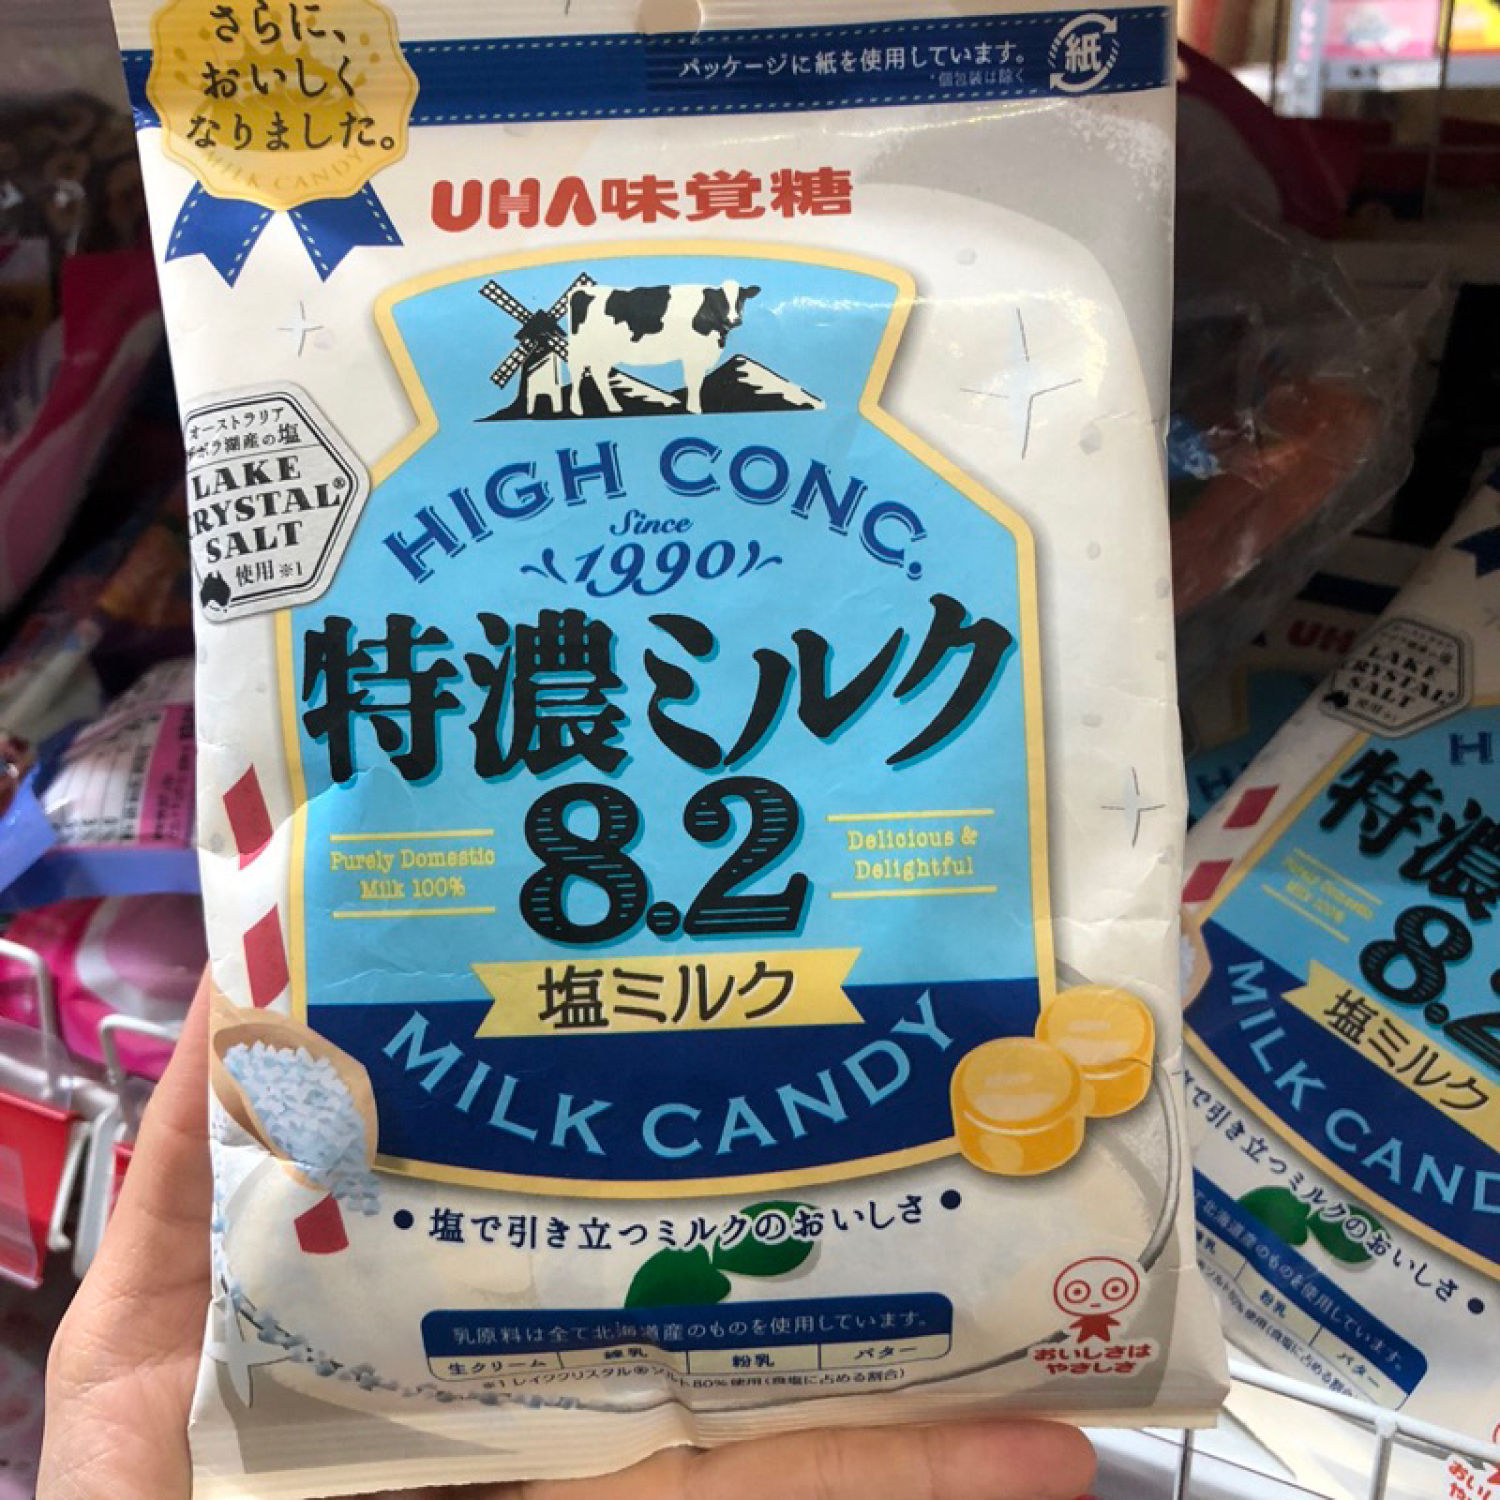 GÓI LỚN Kẹo sữa bò Uha Mikakuto Milk candy Nhật